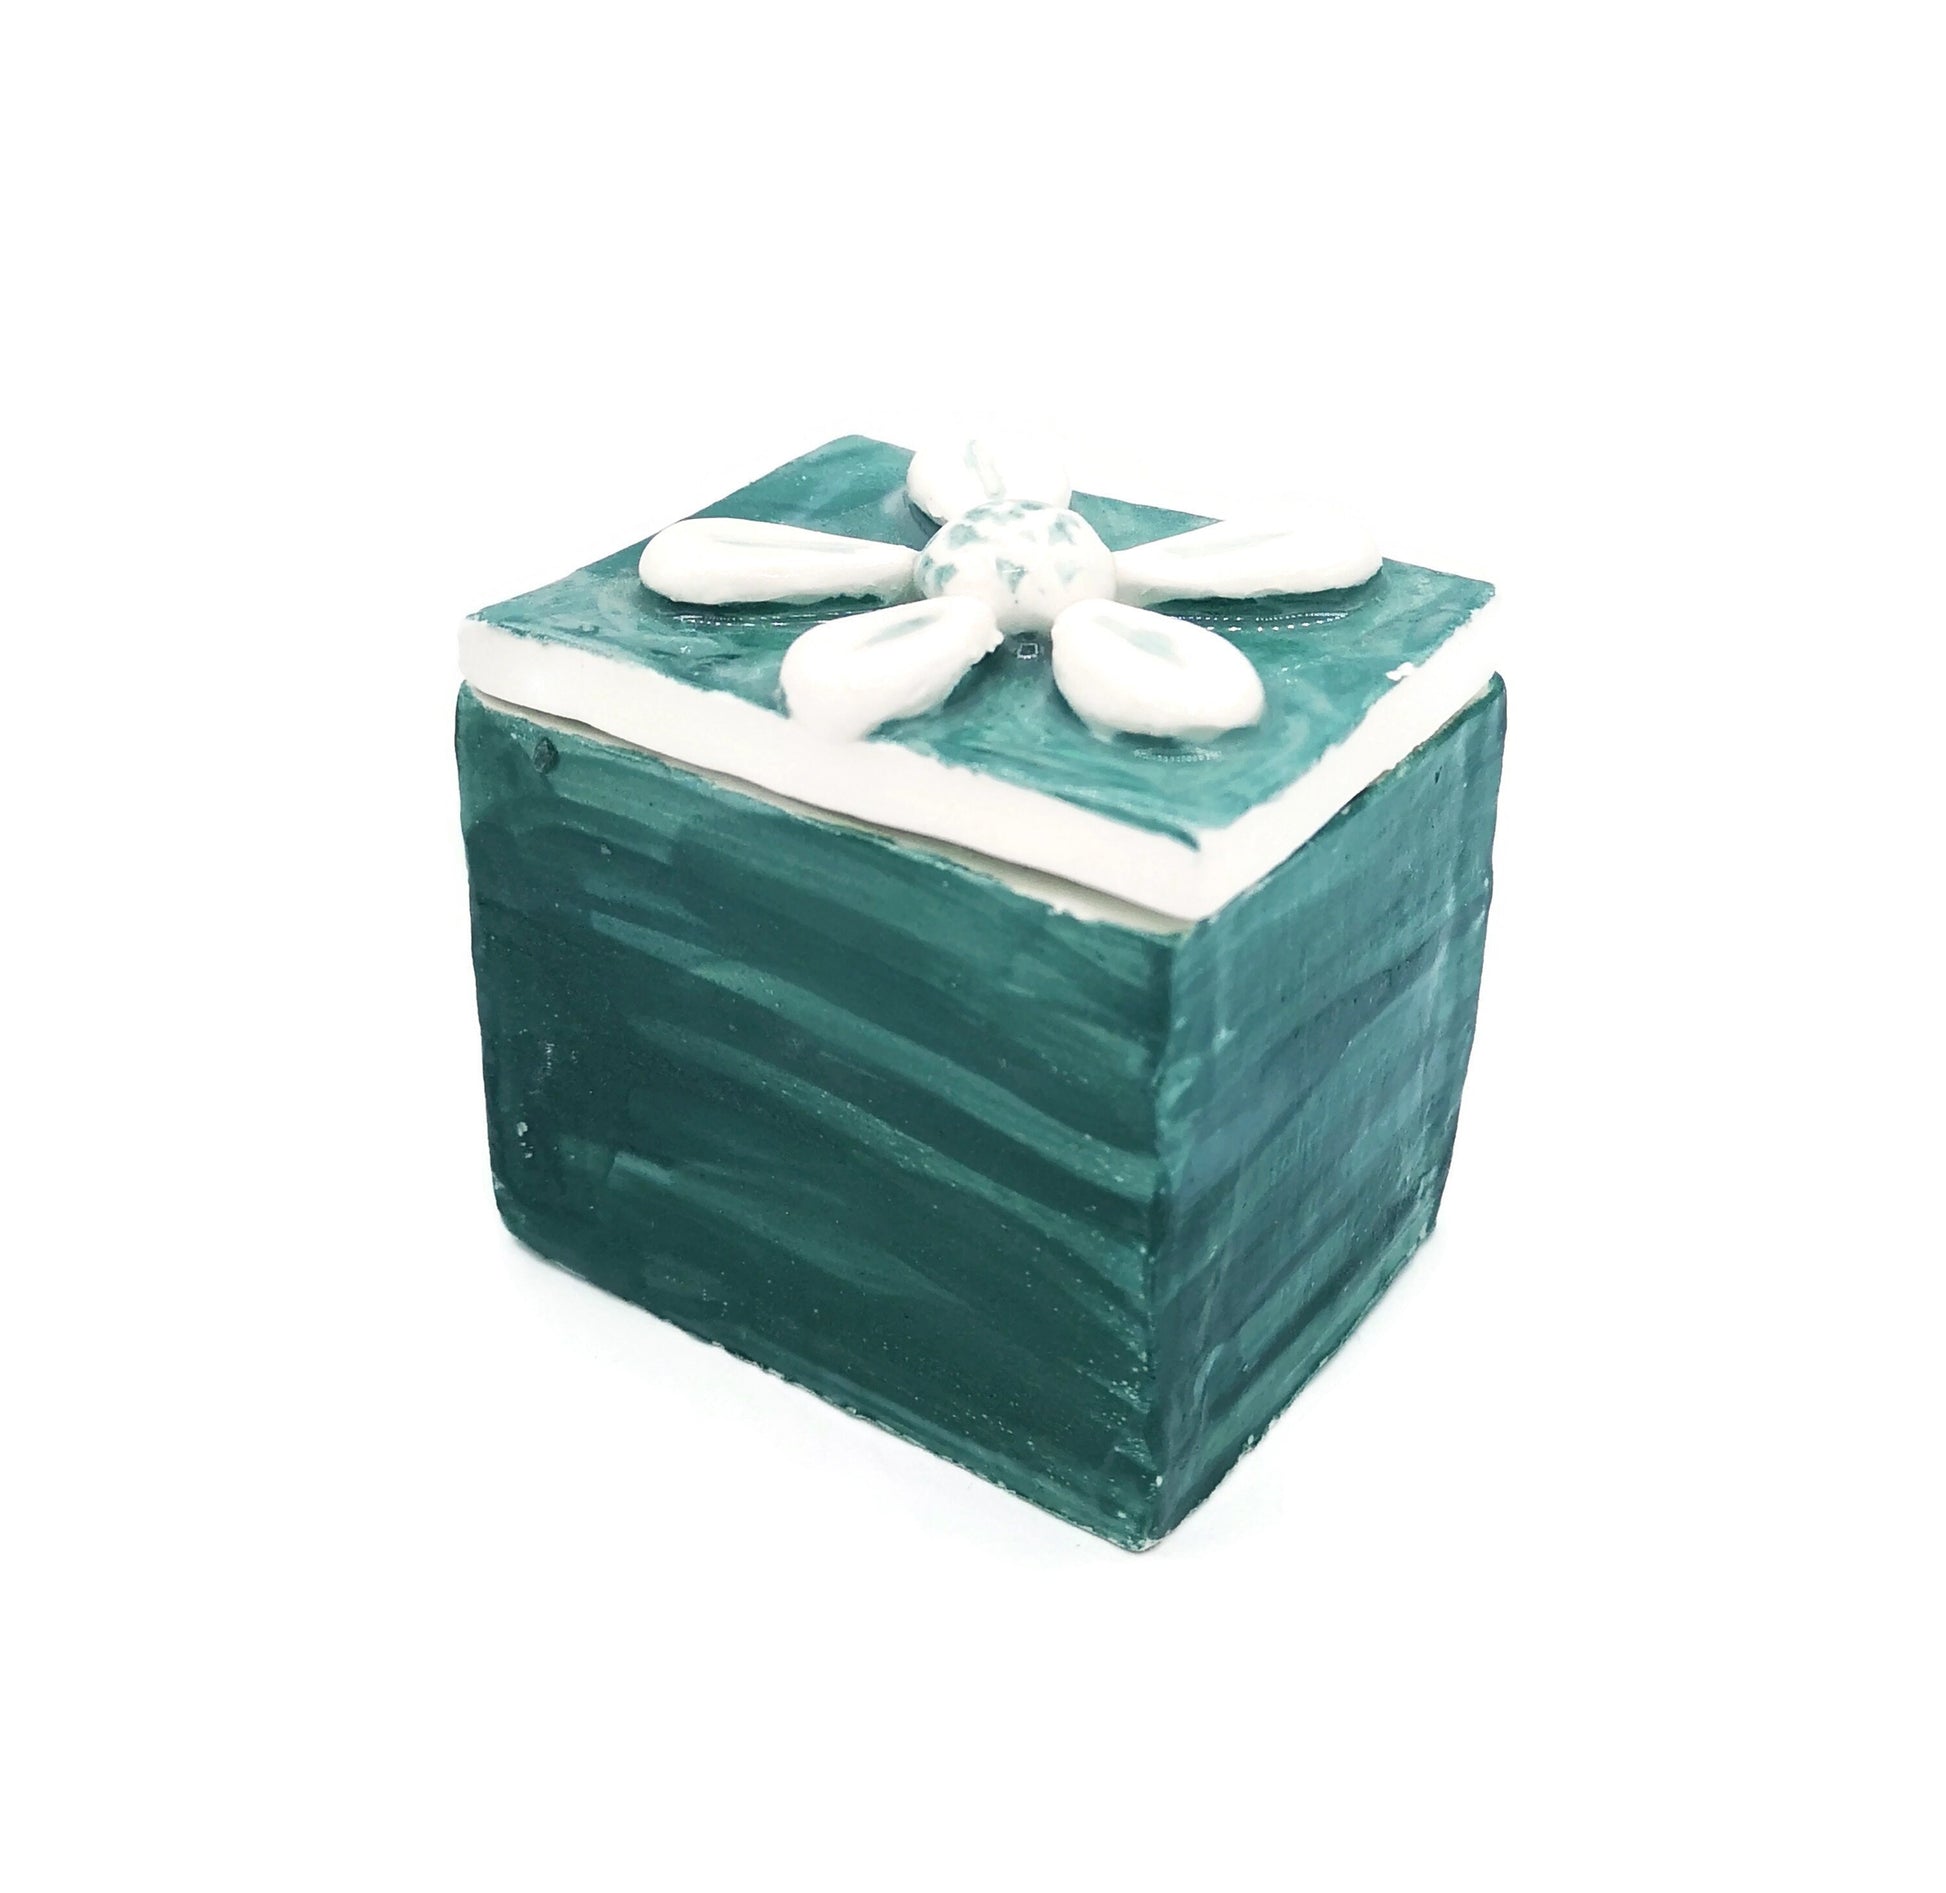 TRINKET BOX, CERAMIC Box, Custom Jewelry Box With Lid, Keepsake Box Mothers Day Gifts For Women Who Has Everything, Small Decorative Box - Ceramica Ana Rafael